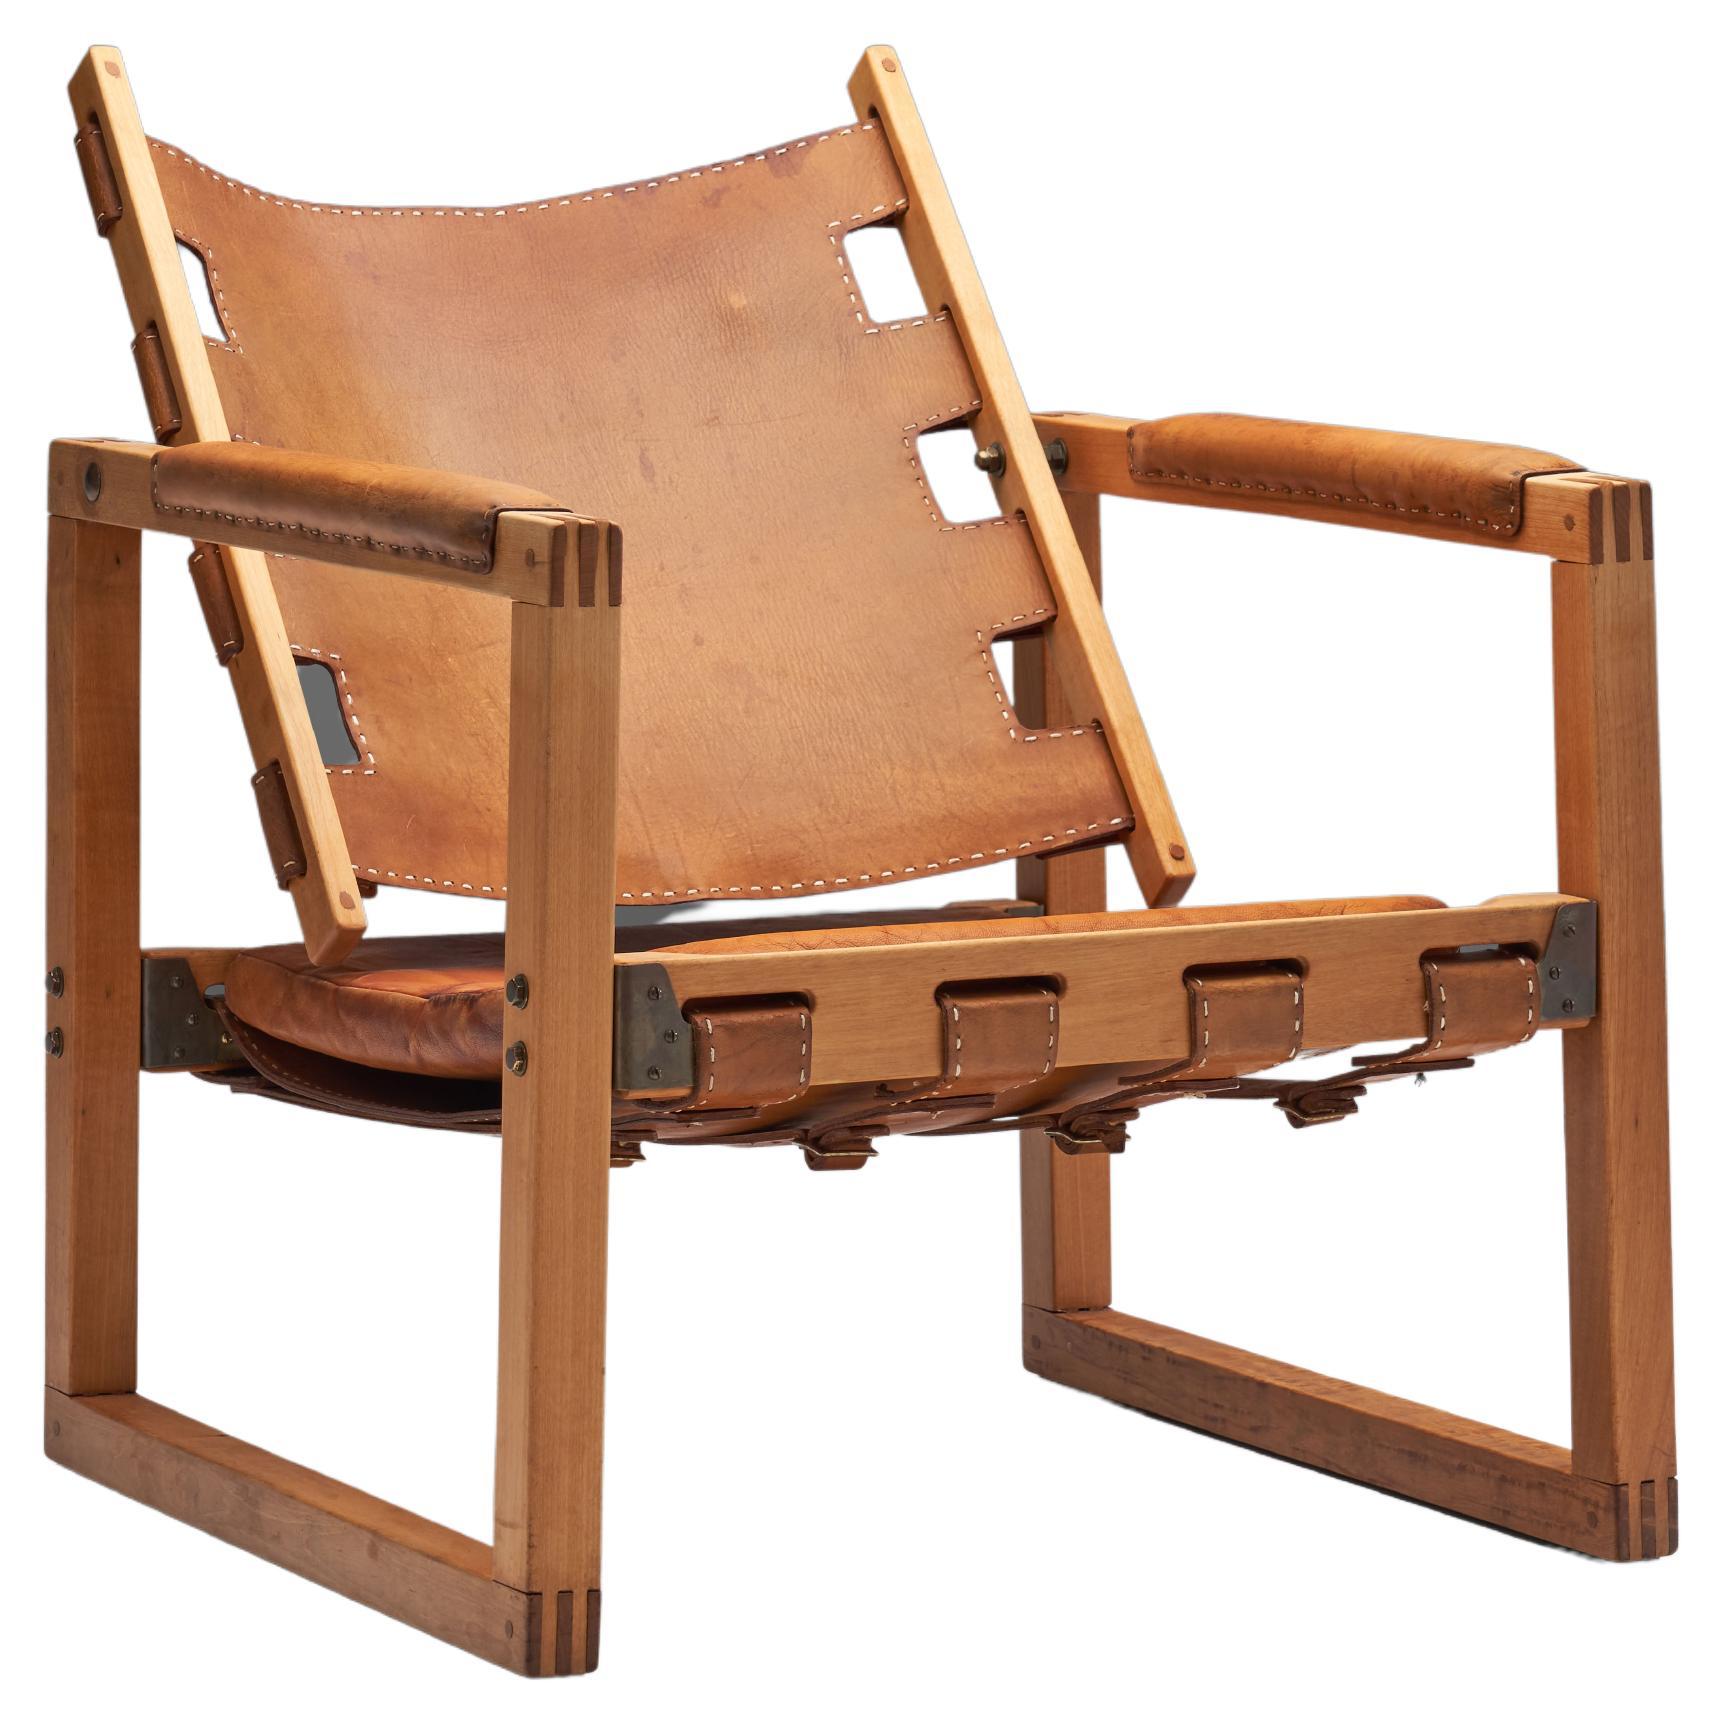 For Janice - CH VAT Prepayment for Safari Chair by Peder Hansen